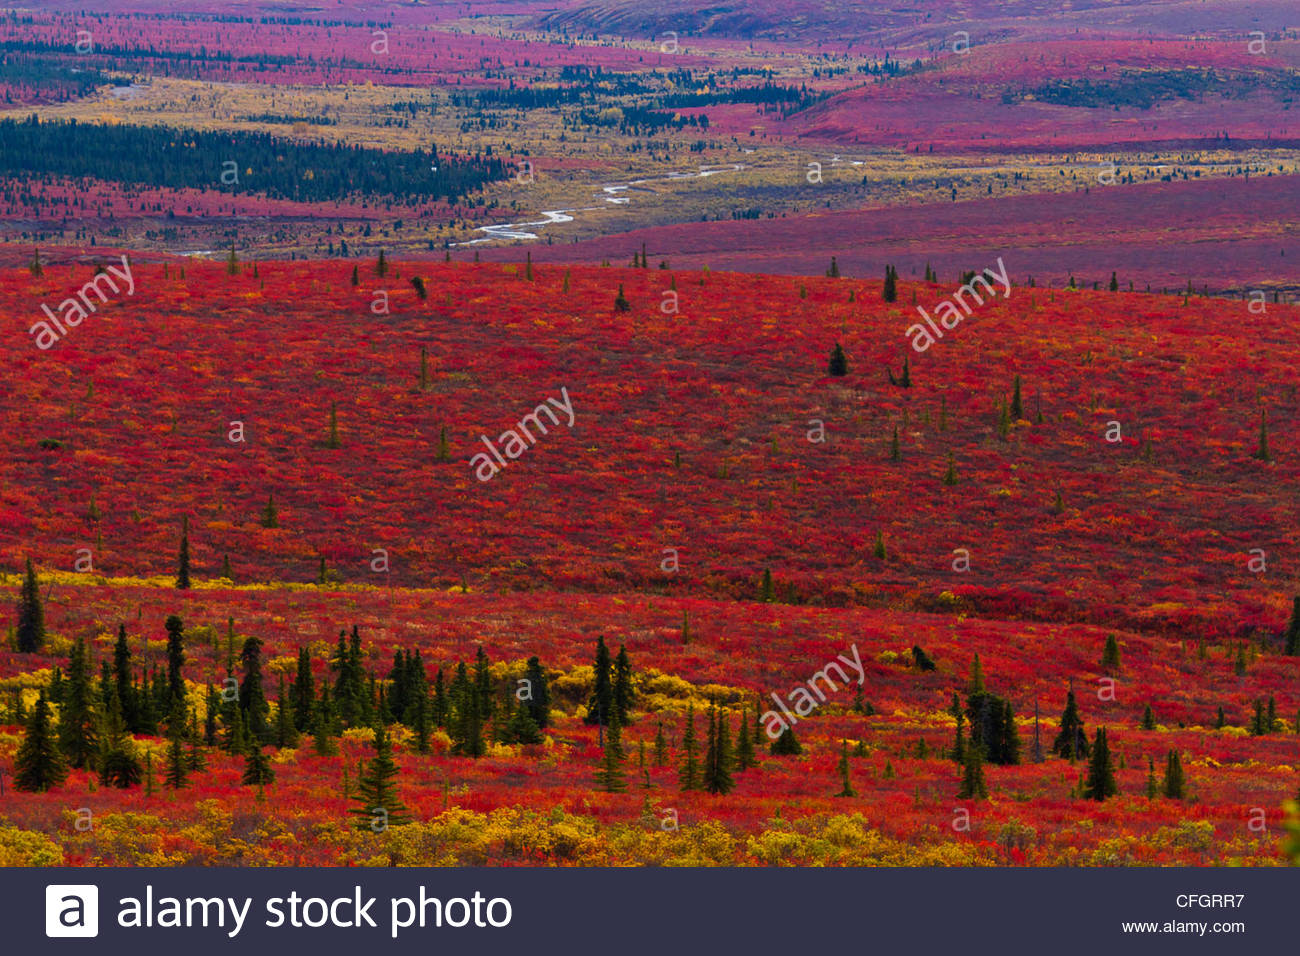 Bright red fall foliage on the Alaskan tundra. Stock Photo